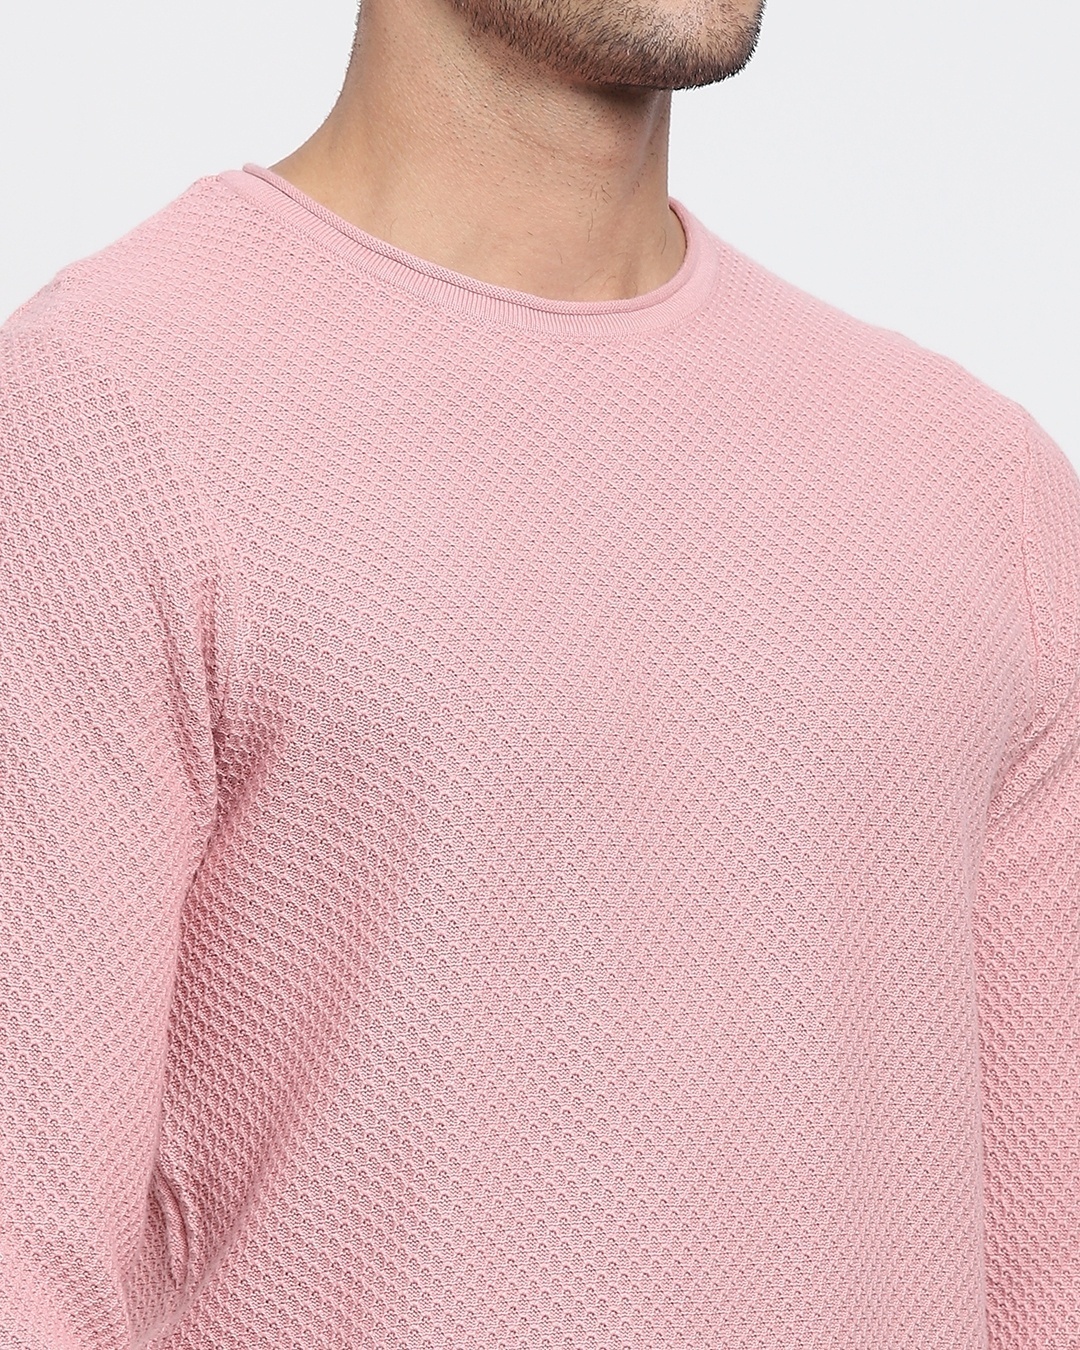 Shop Men's Pink Flat Knit Sweater